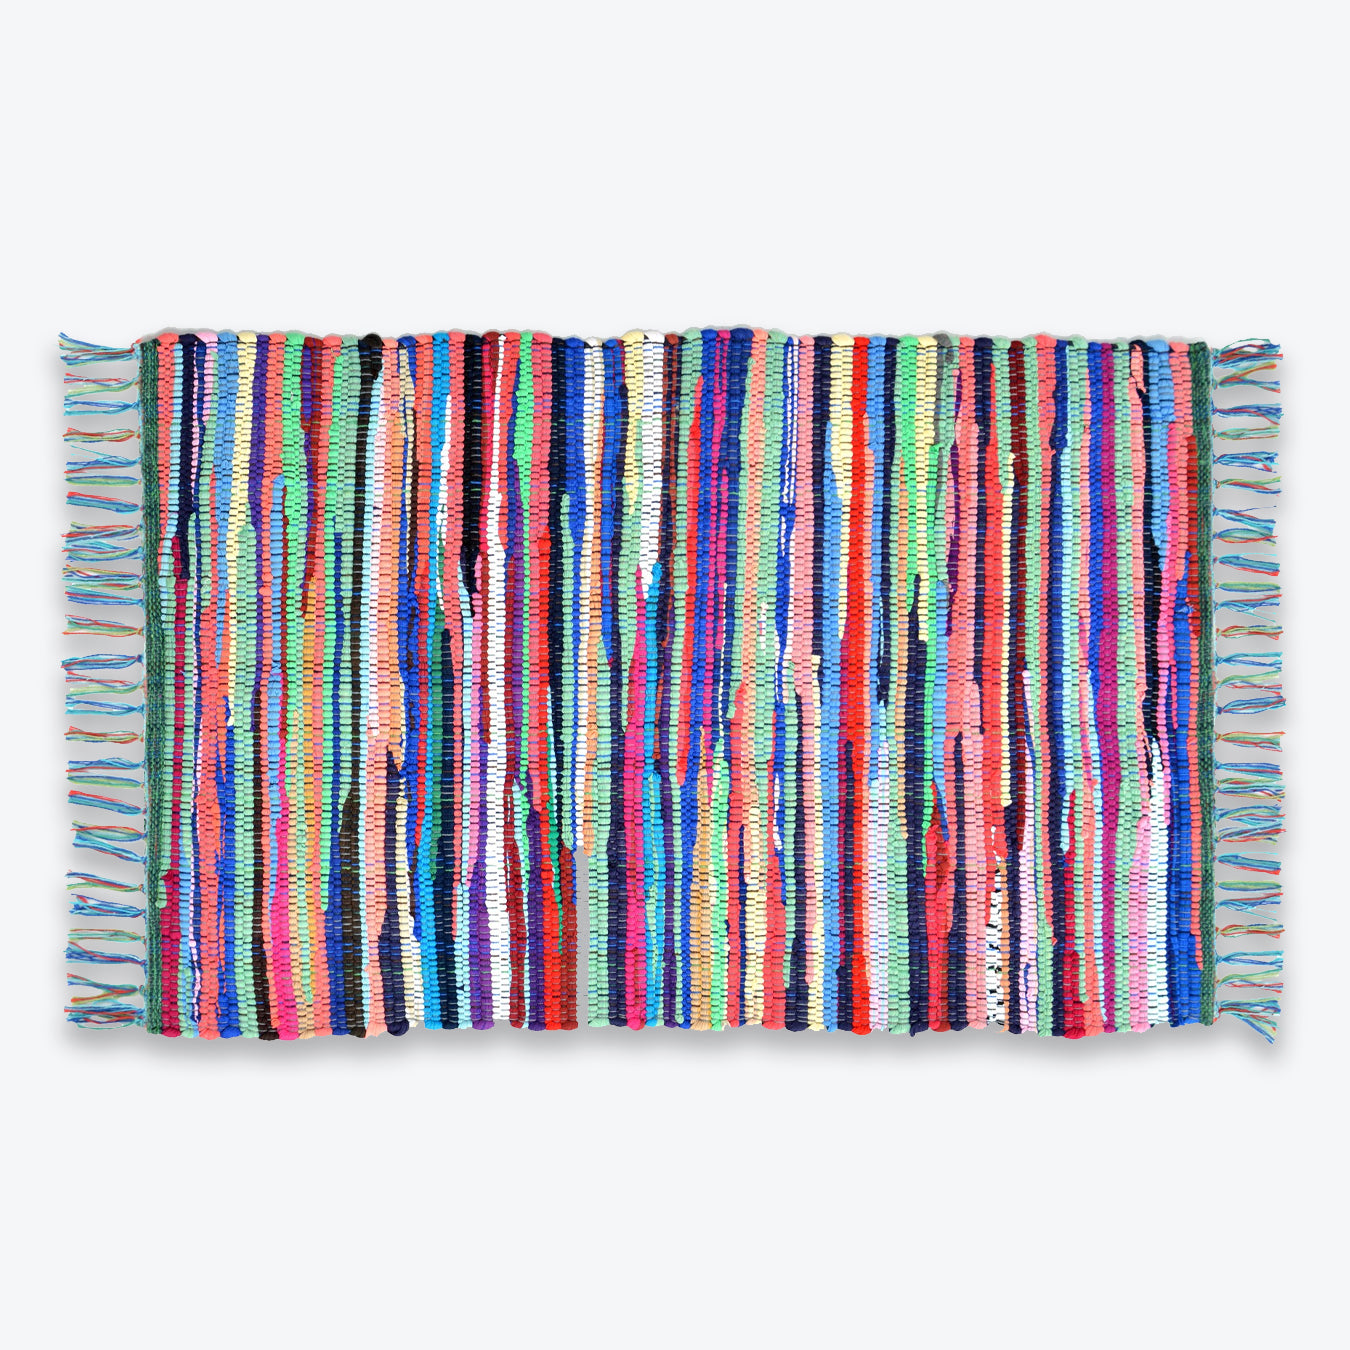 Colourful chindi rag rug 60 x 90cm with tasselled fringe